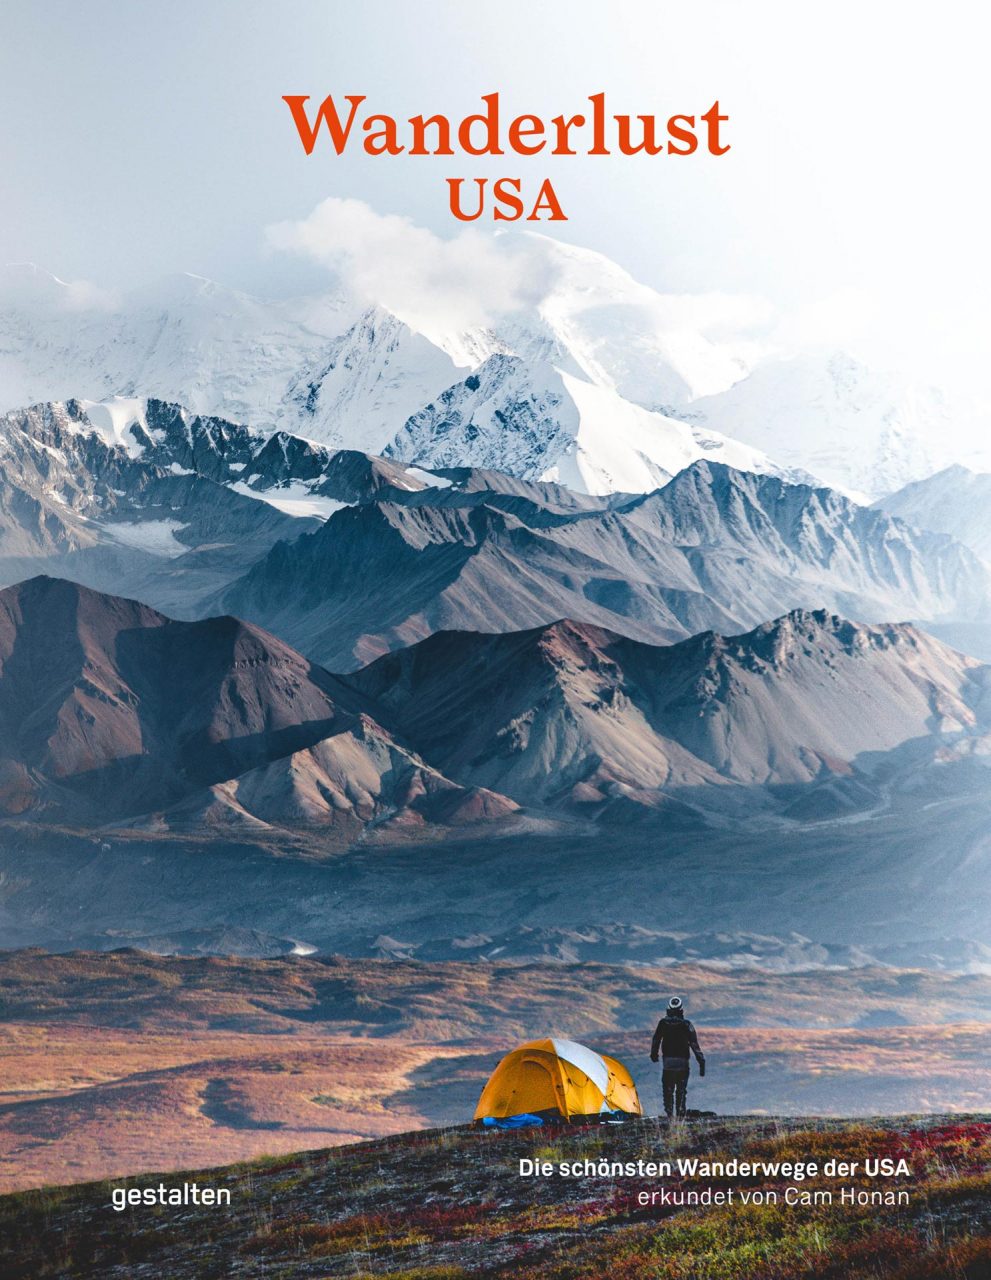 Cover © Wanderlust USA, Gestalten, 2019